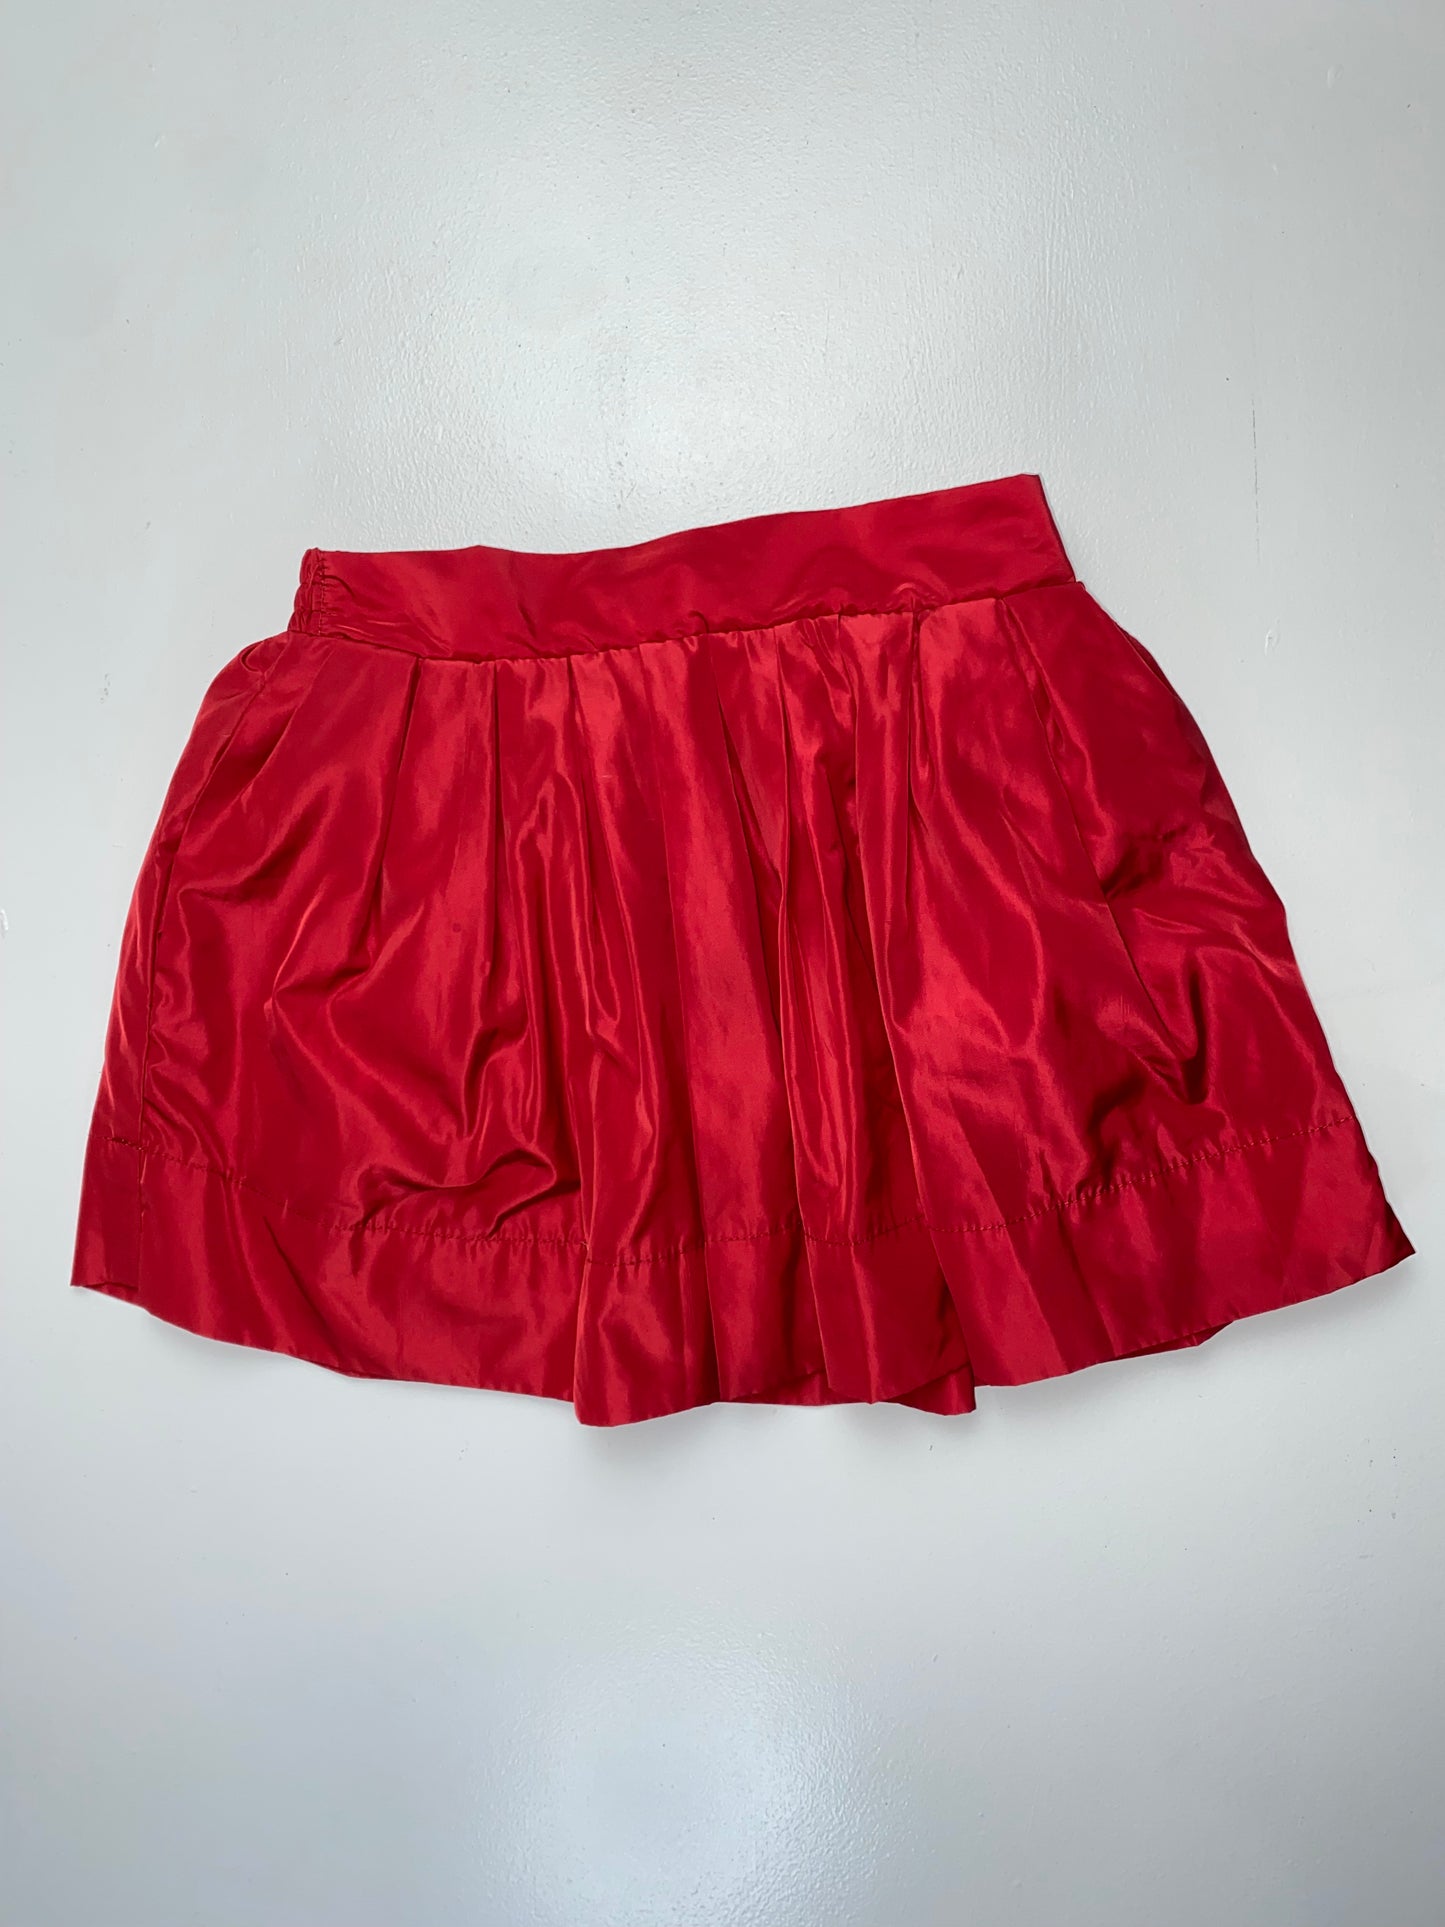 Joe Fresh Red Satin Skirt S(6)